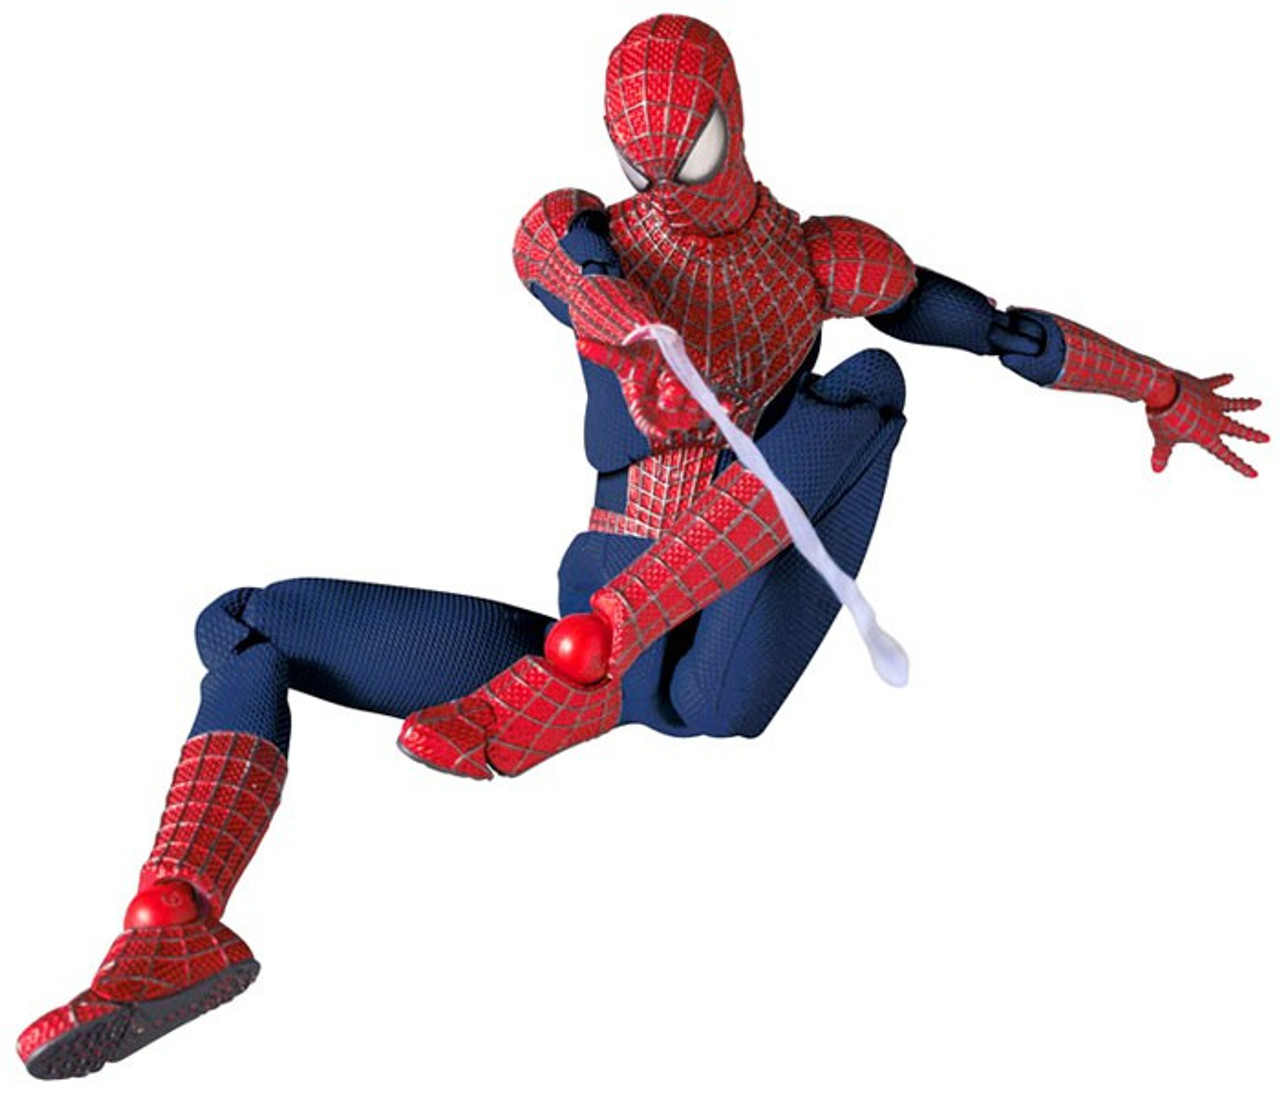 The Amazing Spider-Man 2 MAFEX Spider-Man 6 Action Figure Standard ... - ApiggDbub  05168.1461369663